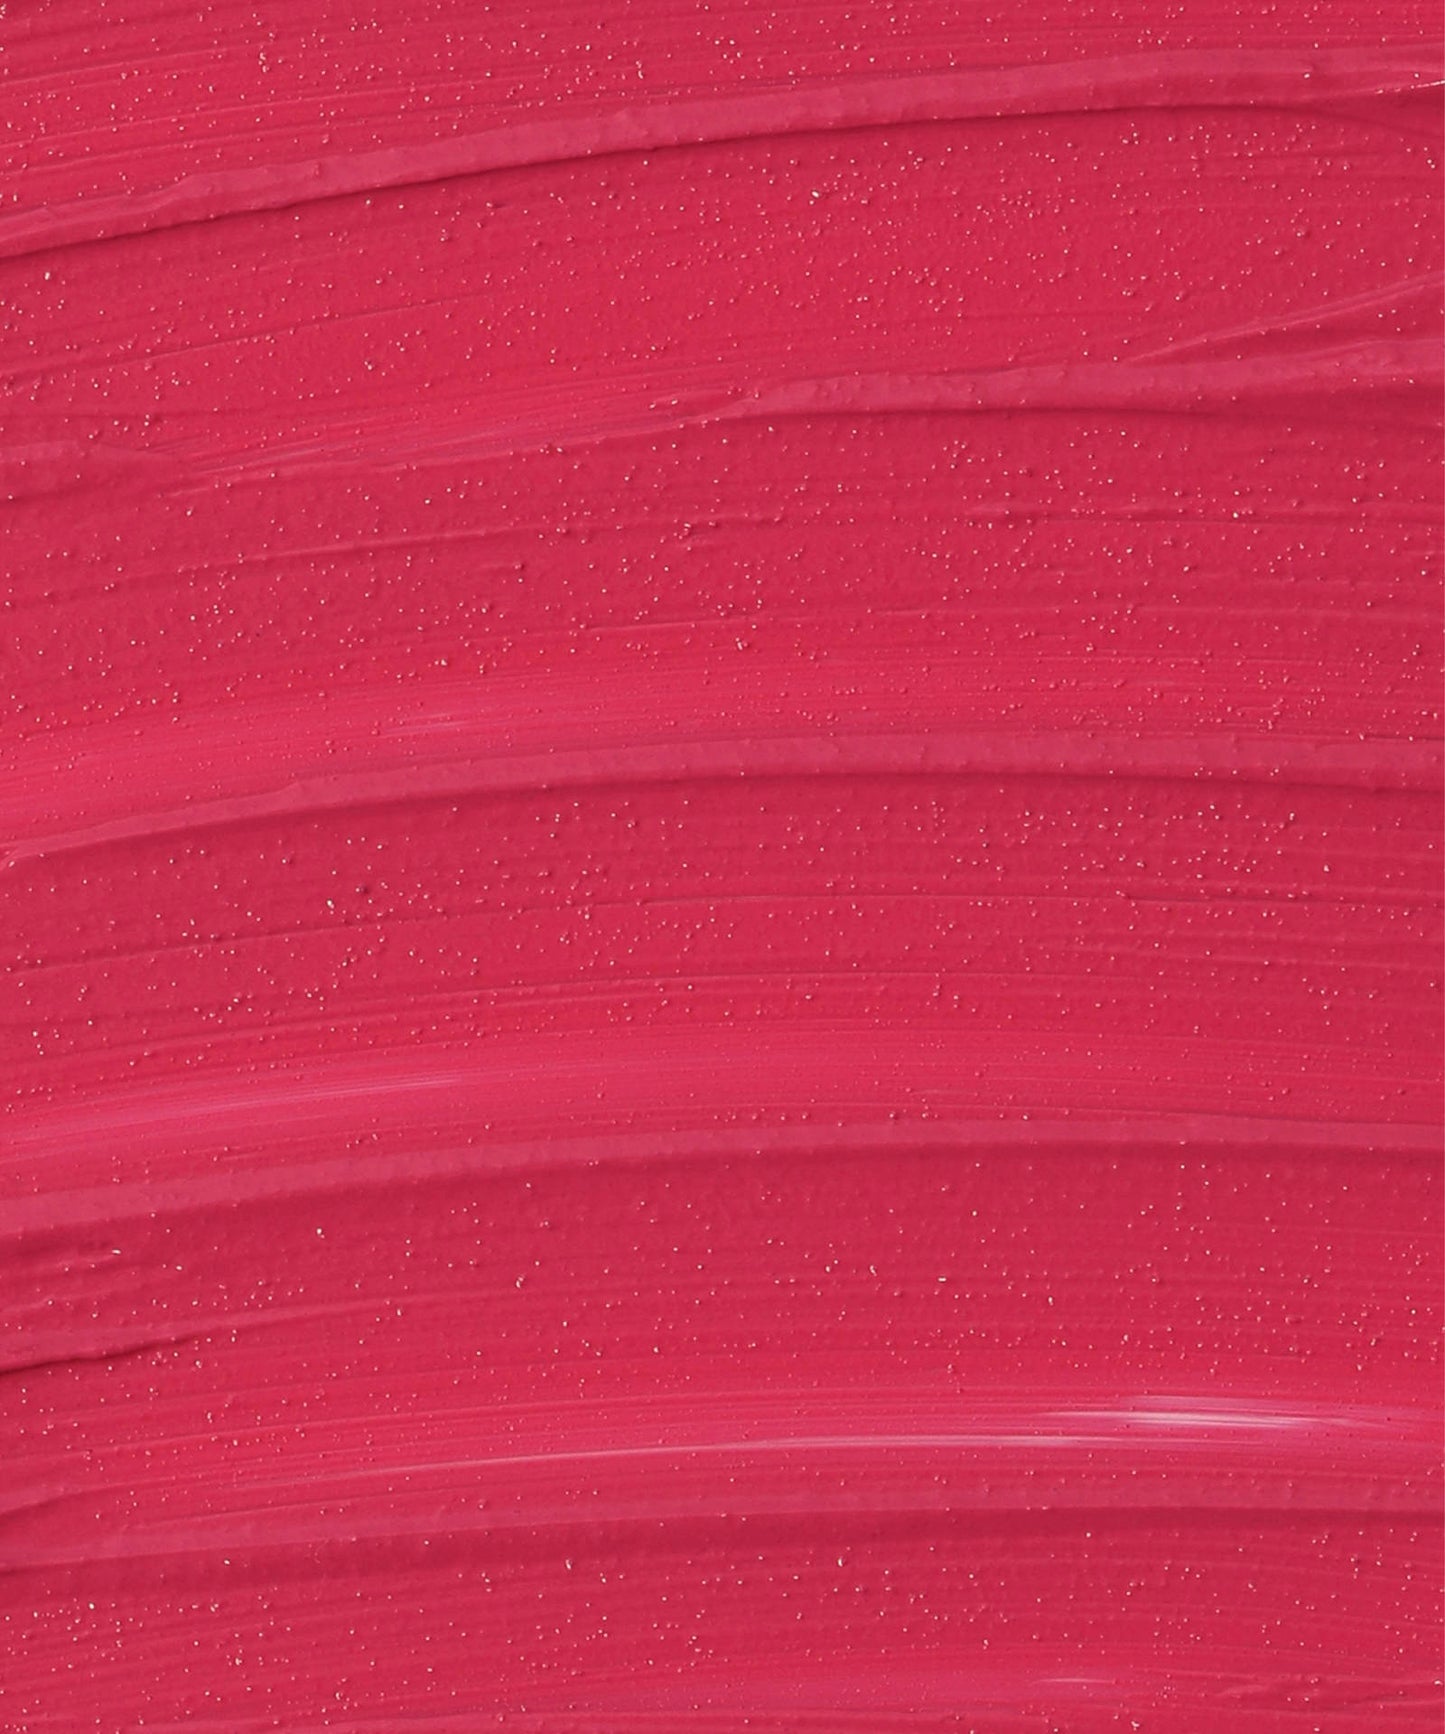 Jeffree Star Cosmetics Velour Liquid Lipstick- Romeo